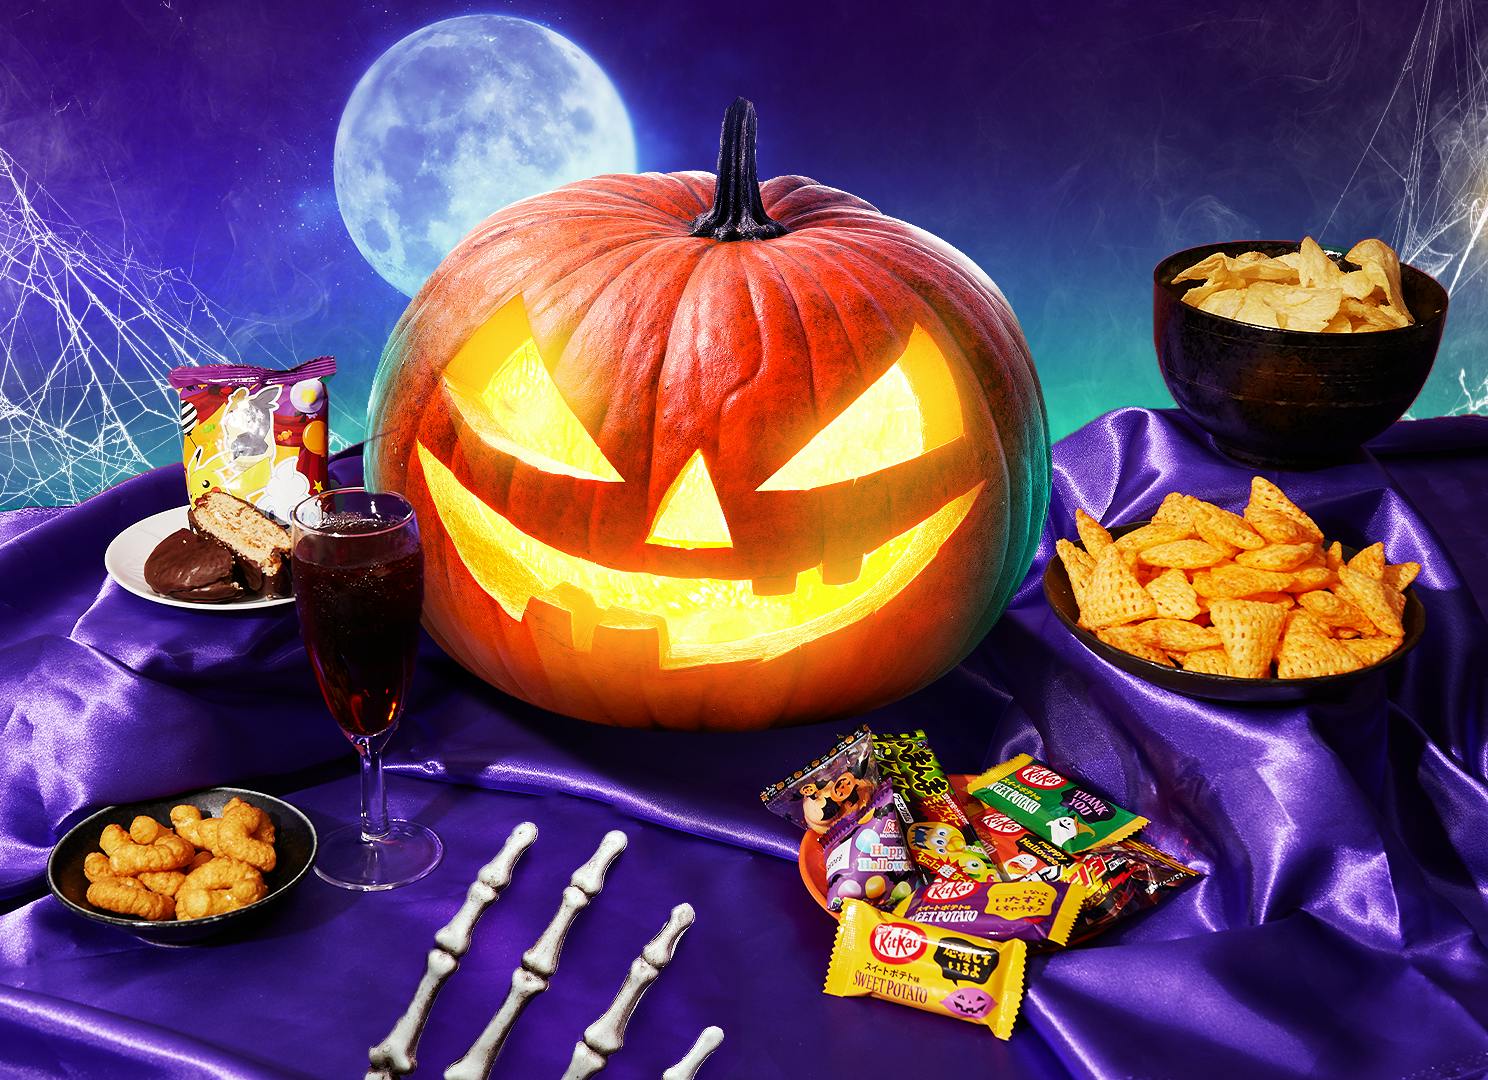 Items from the Halloween SnackHaul box sit on a purple velvet backdrop next to a Jack-o-lantern.